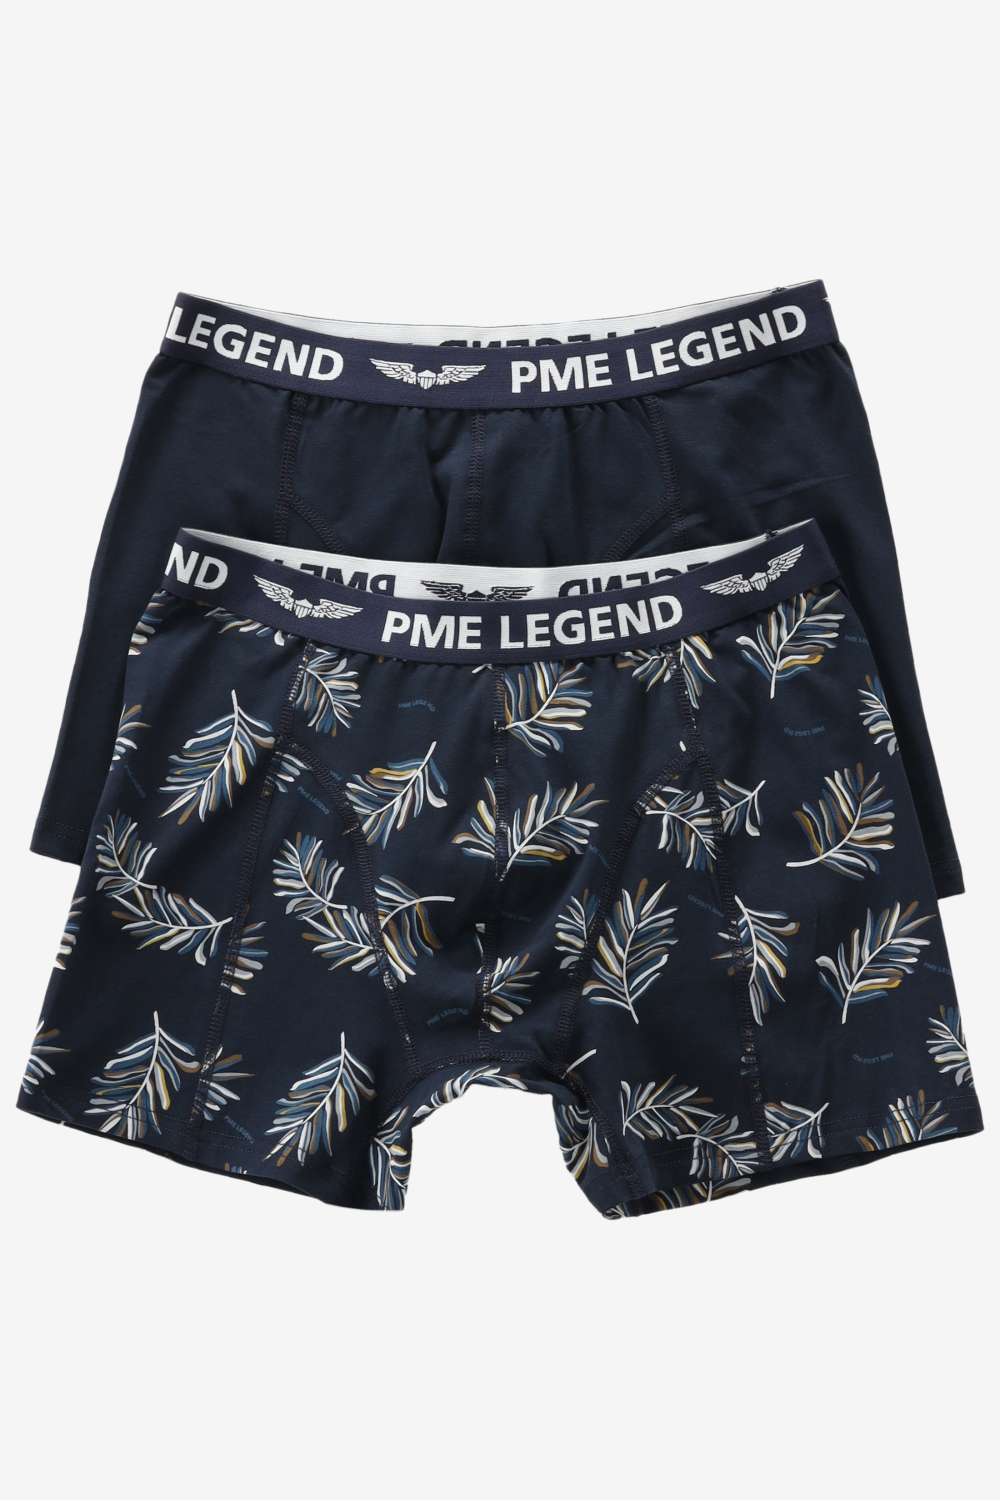 Pme legend underwear maat XXL